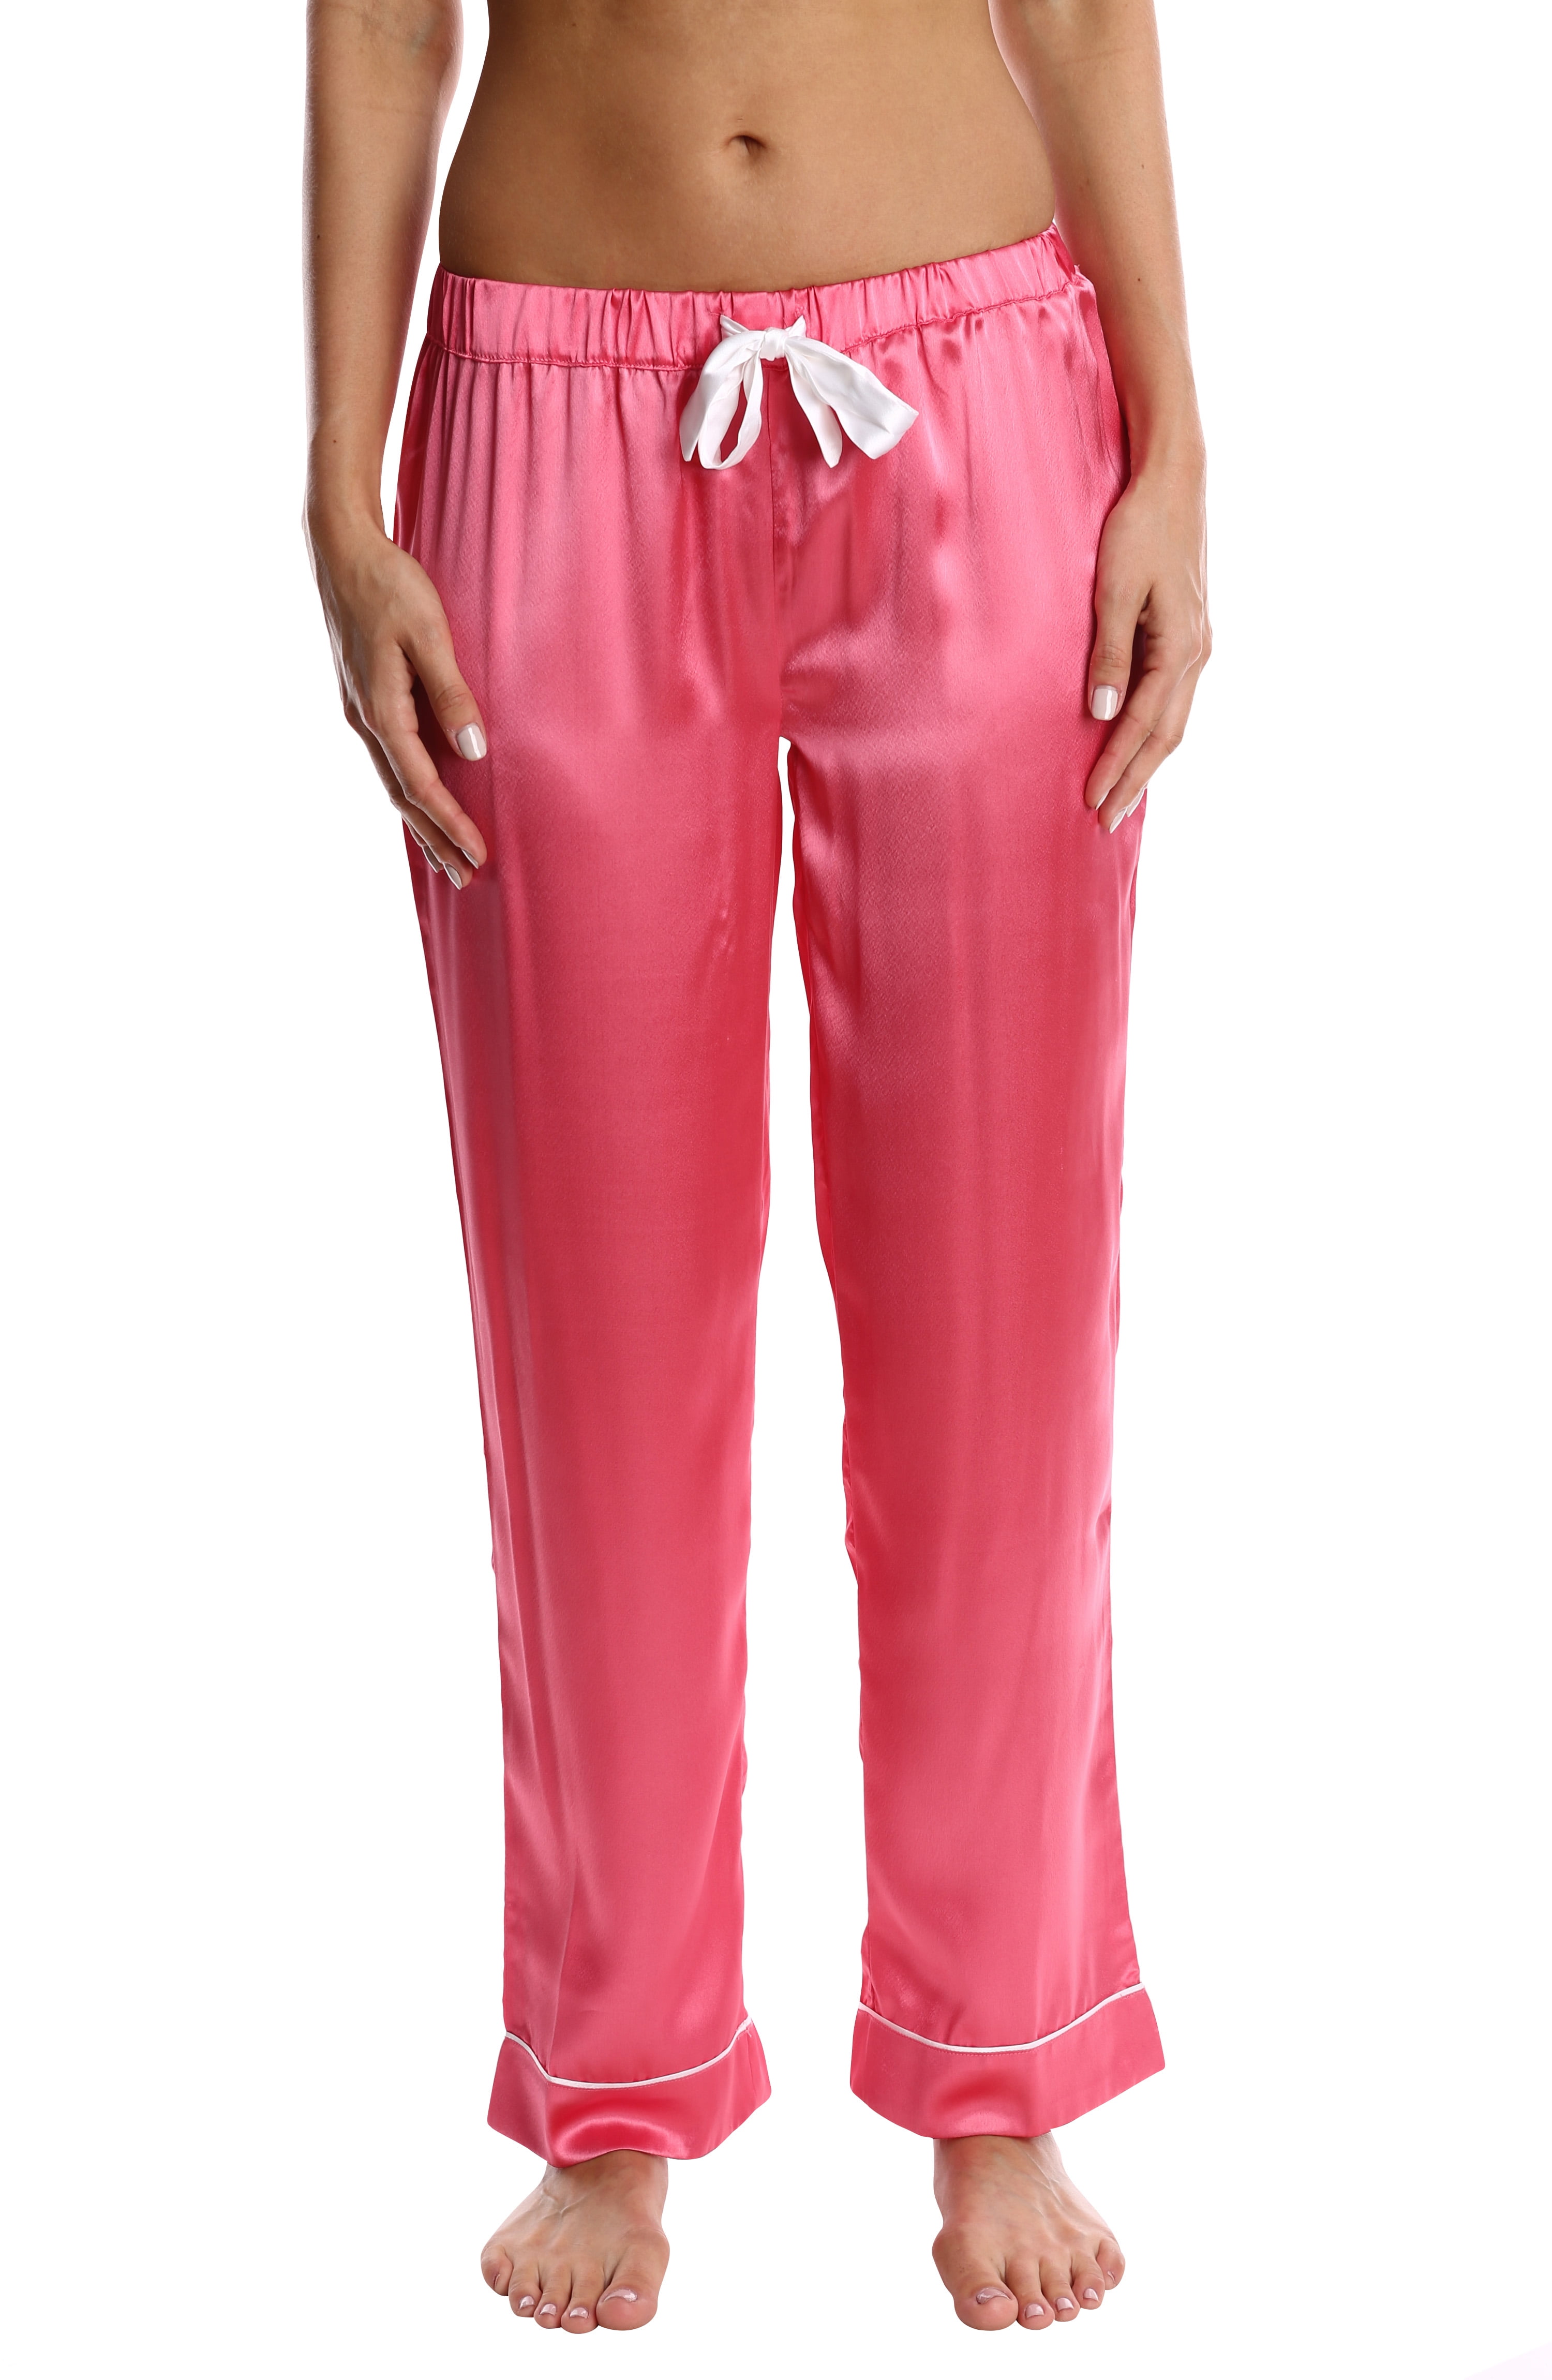 Blis Blis Womens Satin Pajama Pants Ladies Comfy Lounge And Sleepwear Pj Bottoms Hot Pink 